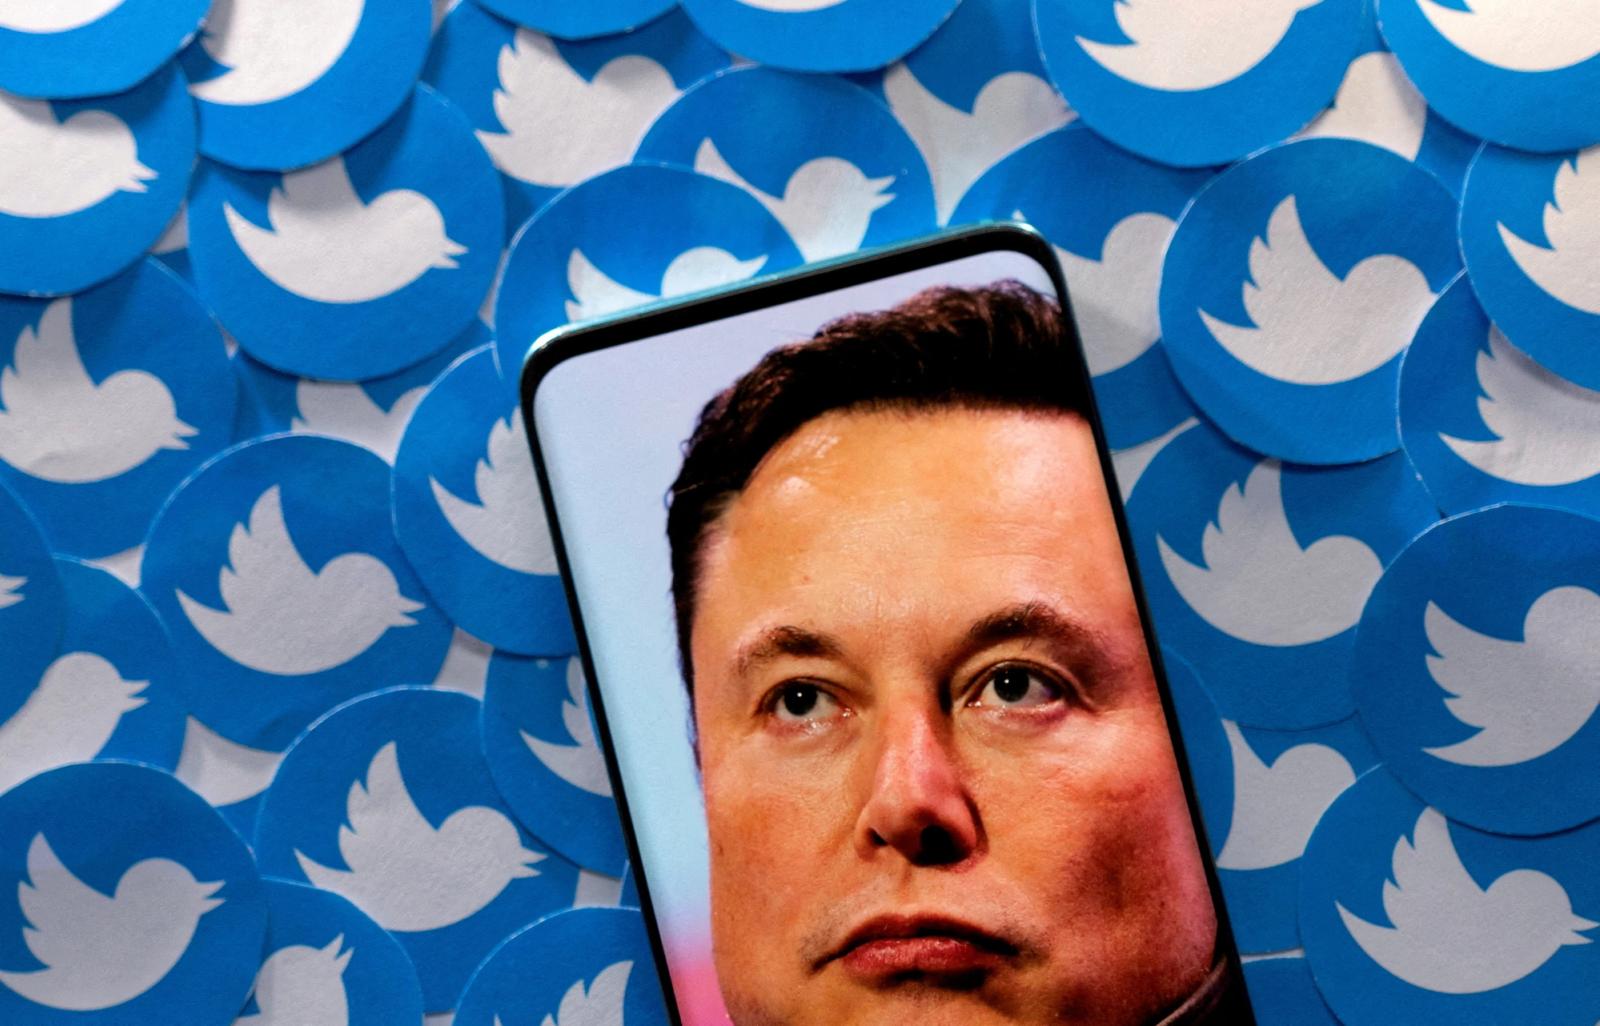 Elon Musk and Twitter's logo